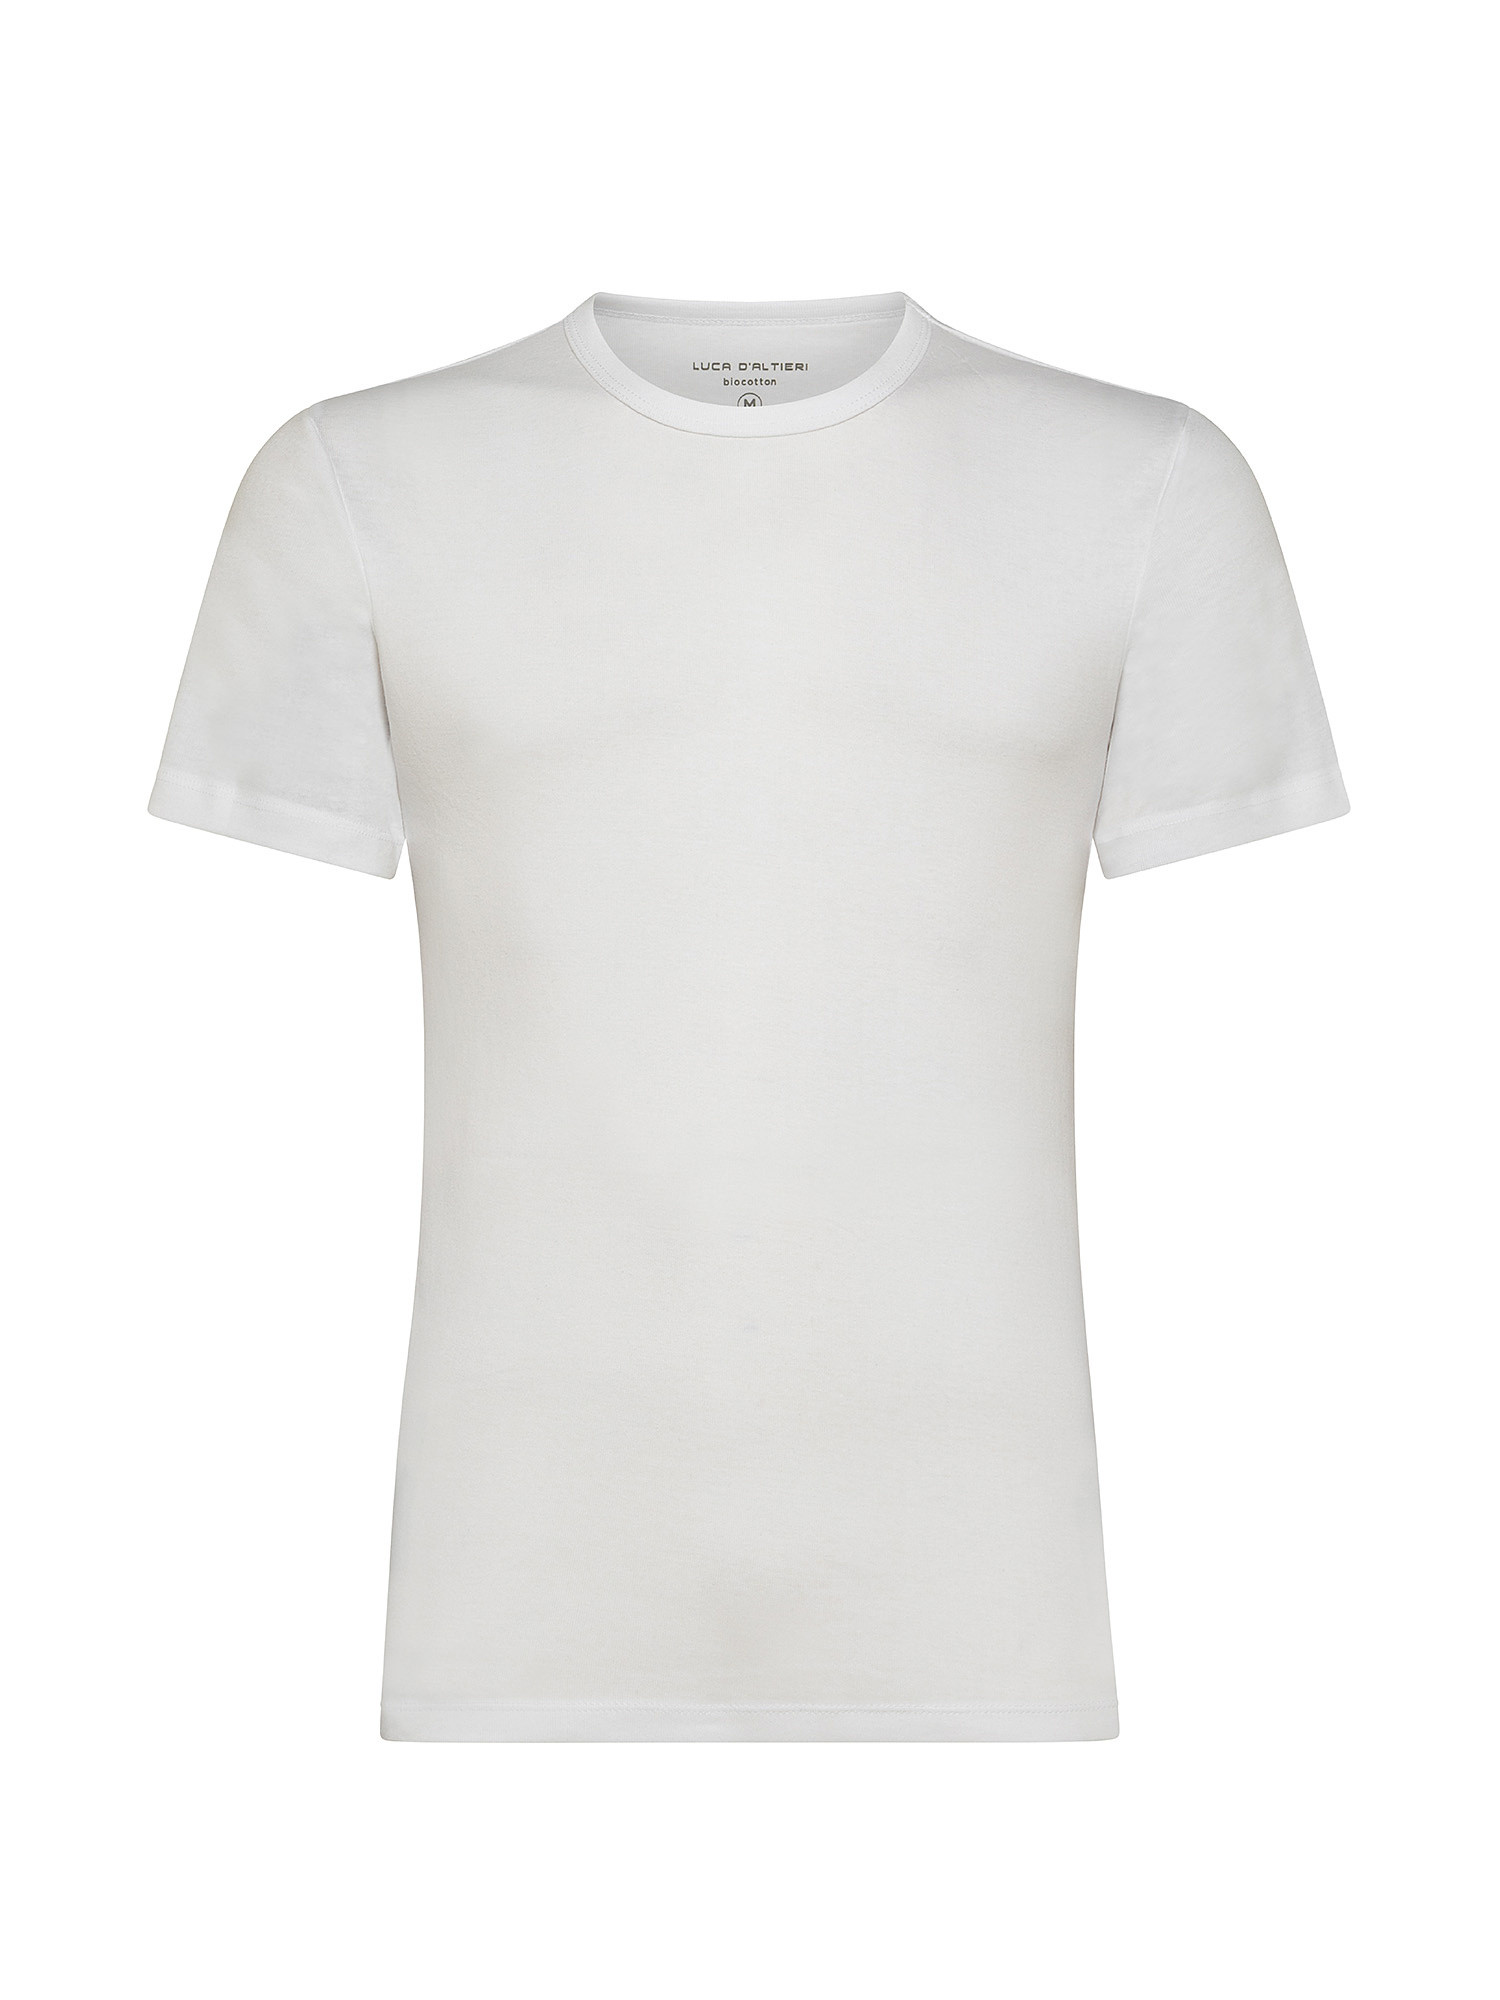 Luca D'Altieri - Set 2 t-shirt, Bianco, large image number 0